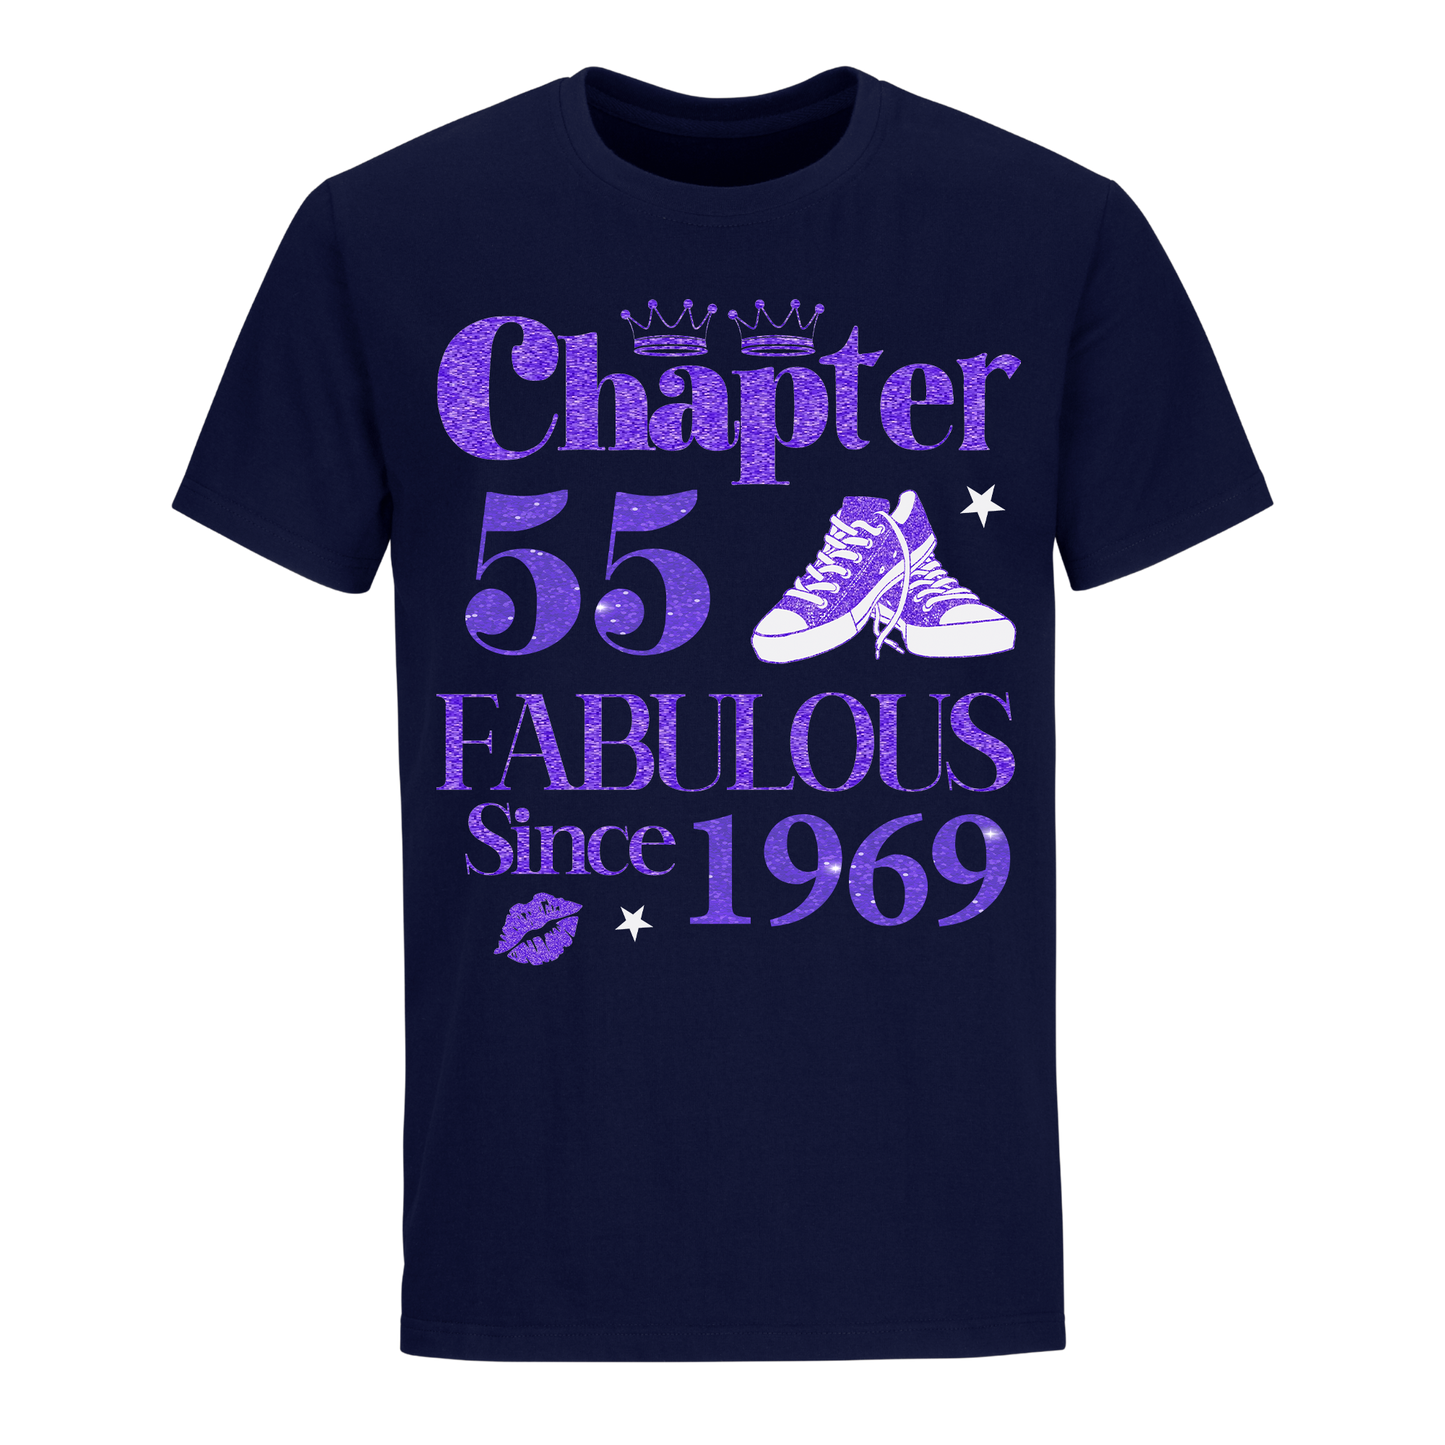 CHAPTER 55TH 1969 FABULOUS UNISEX SHIRT